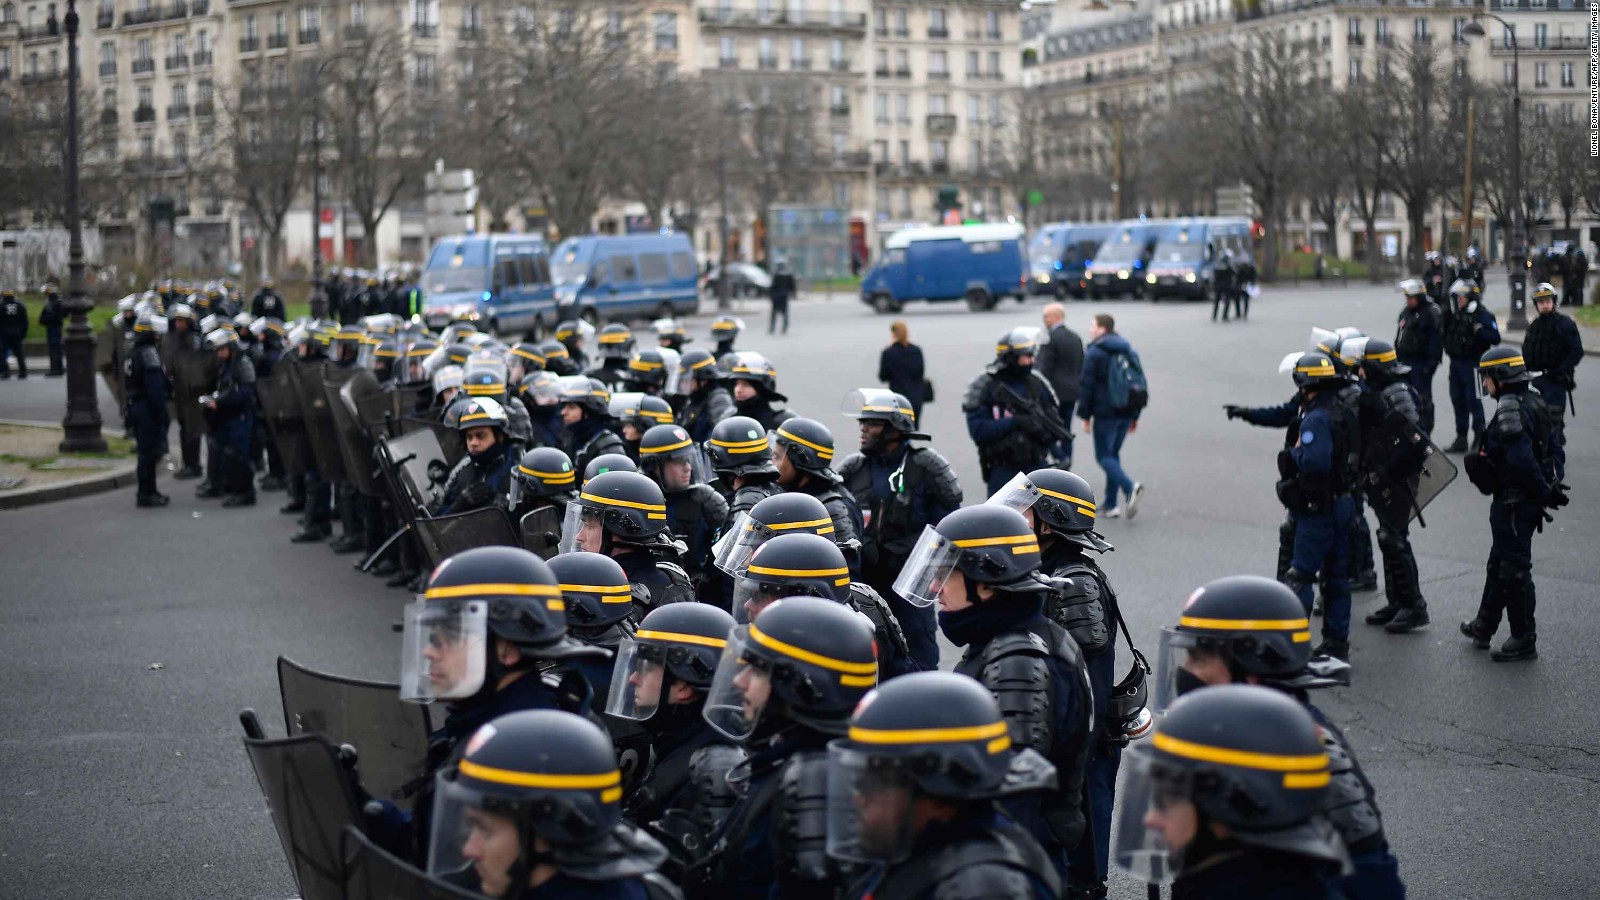 Paris students blockade schools in anti-police protests - CNN